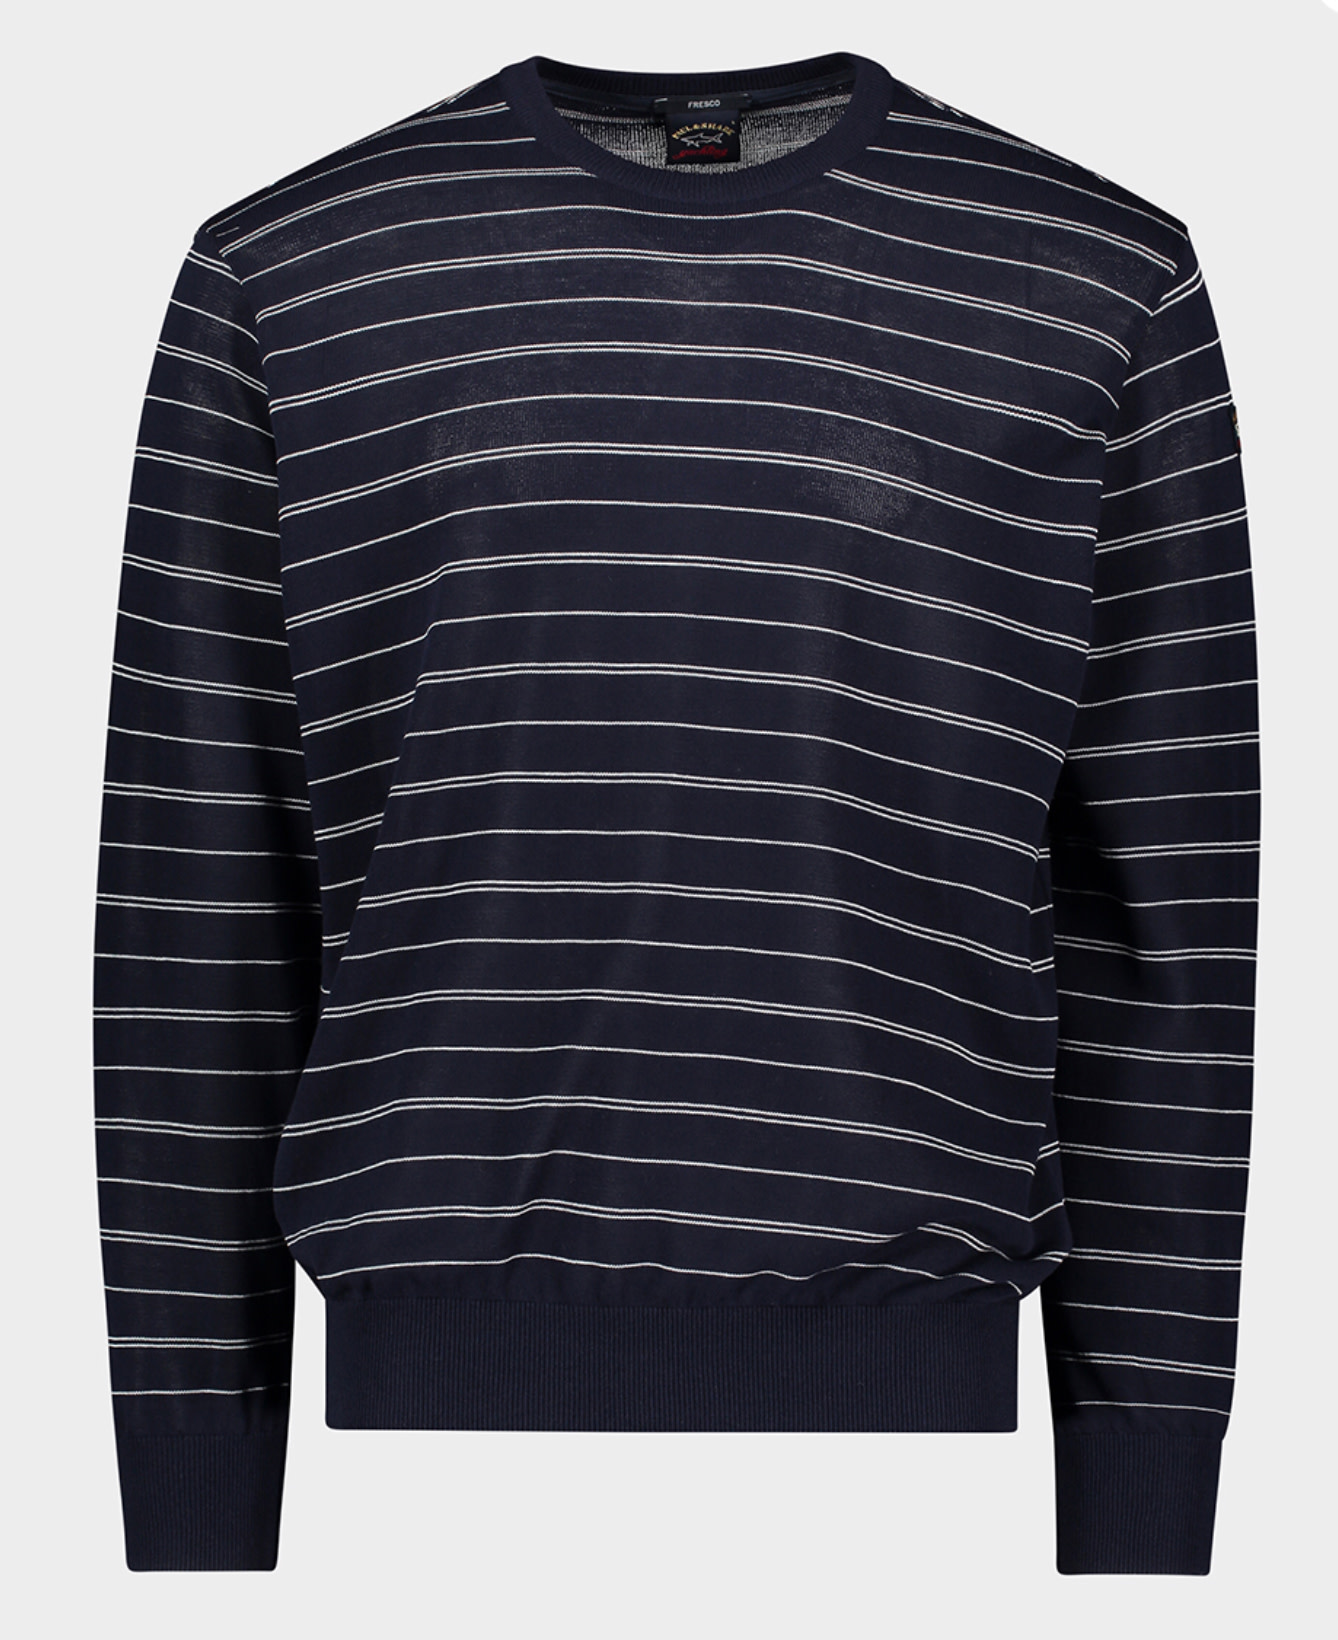 Navy White Striped Sweater - Benjamin's Menswear